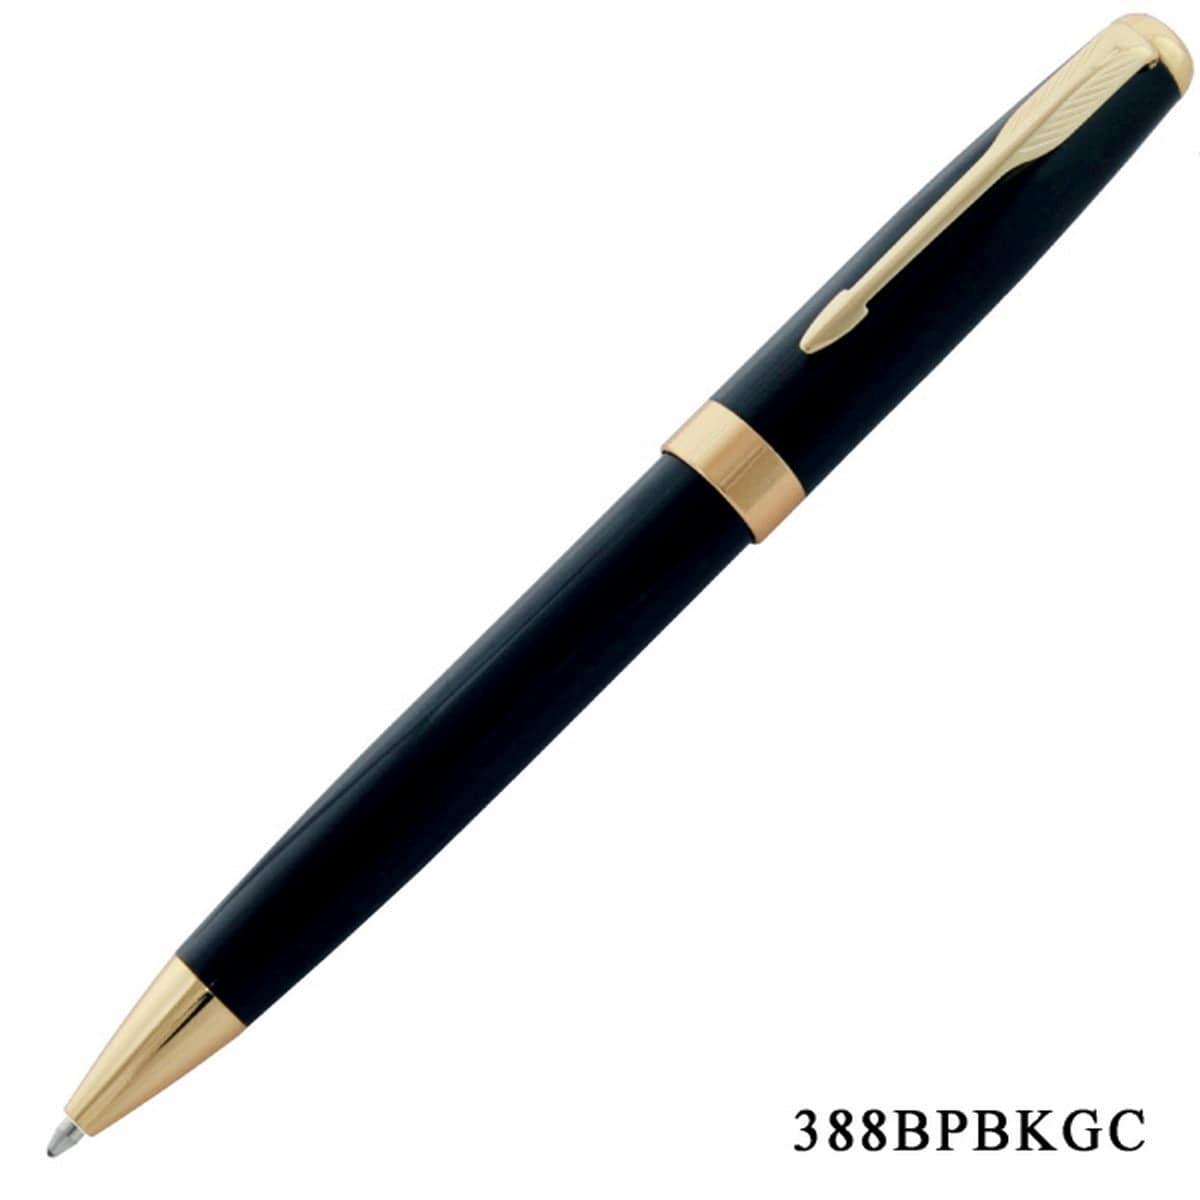 jags-mumbai Roller Pens The Ultimate Writing Companion: Roller Pen Black Golden Clip 388RPBKGC